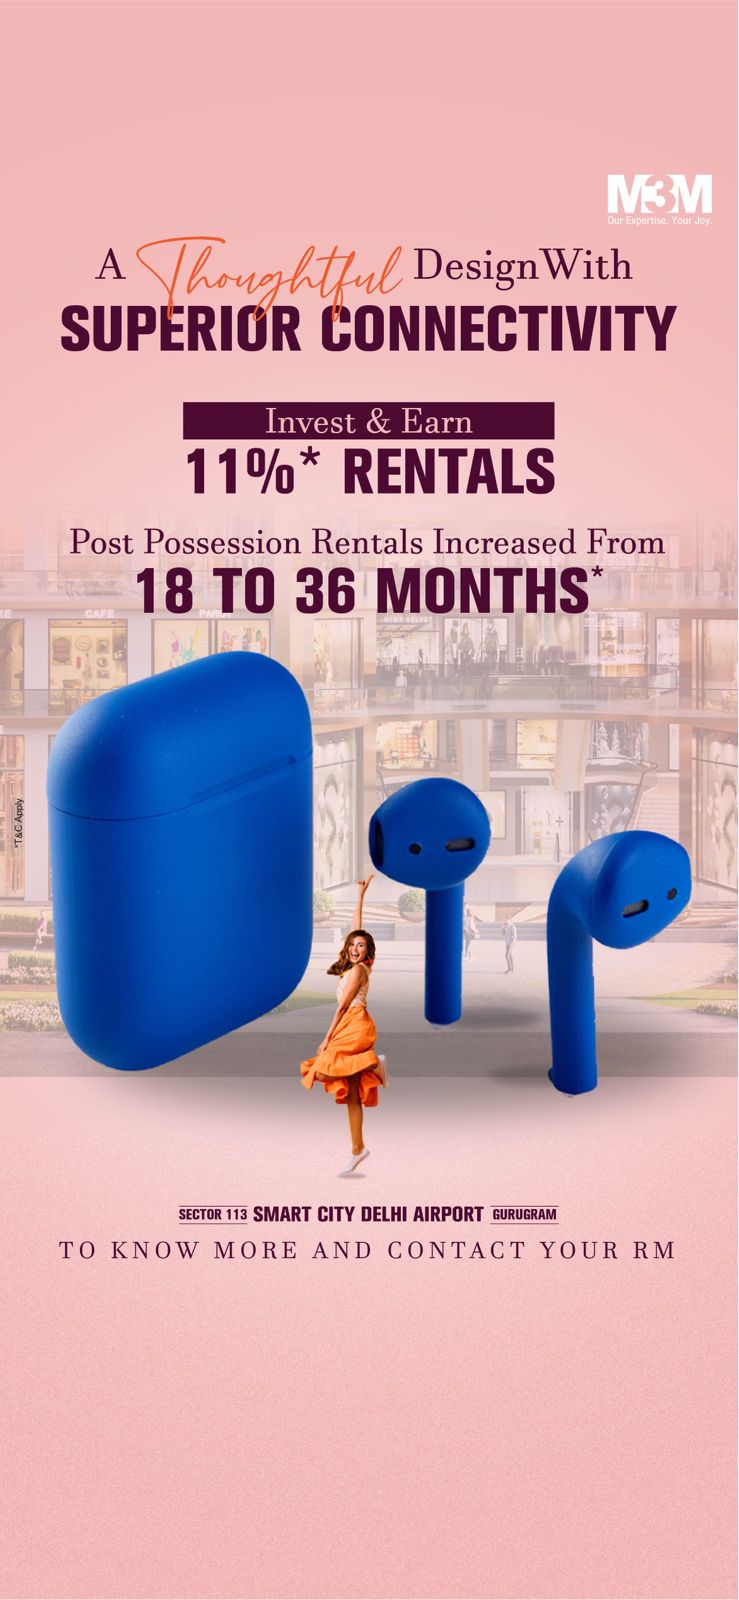 Invest & earn 11% rentals at M3M SCO 113 Market, Gurgaon Update